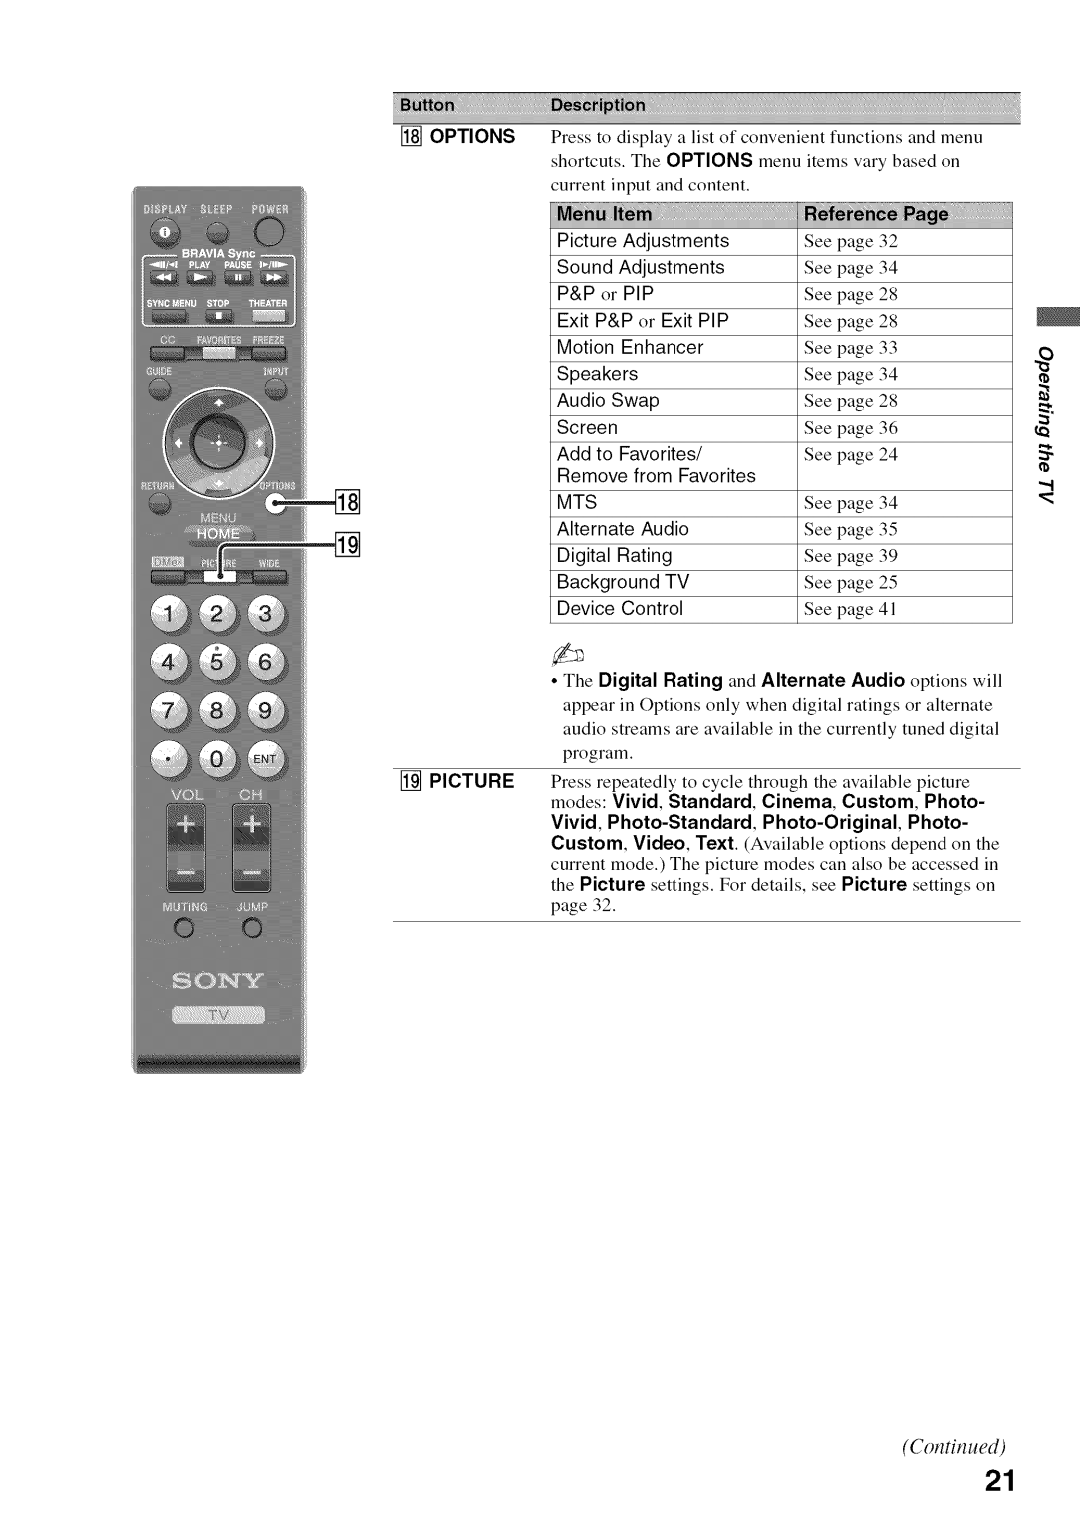 Sony KDL52V4100 operating instructions Motion Enhancer, Screen, Vivid, Photo-Standard, Photo-Original, Photo 